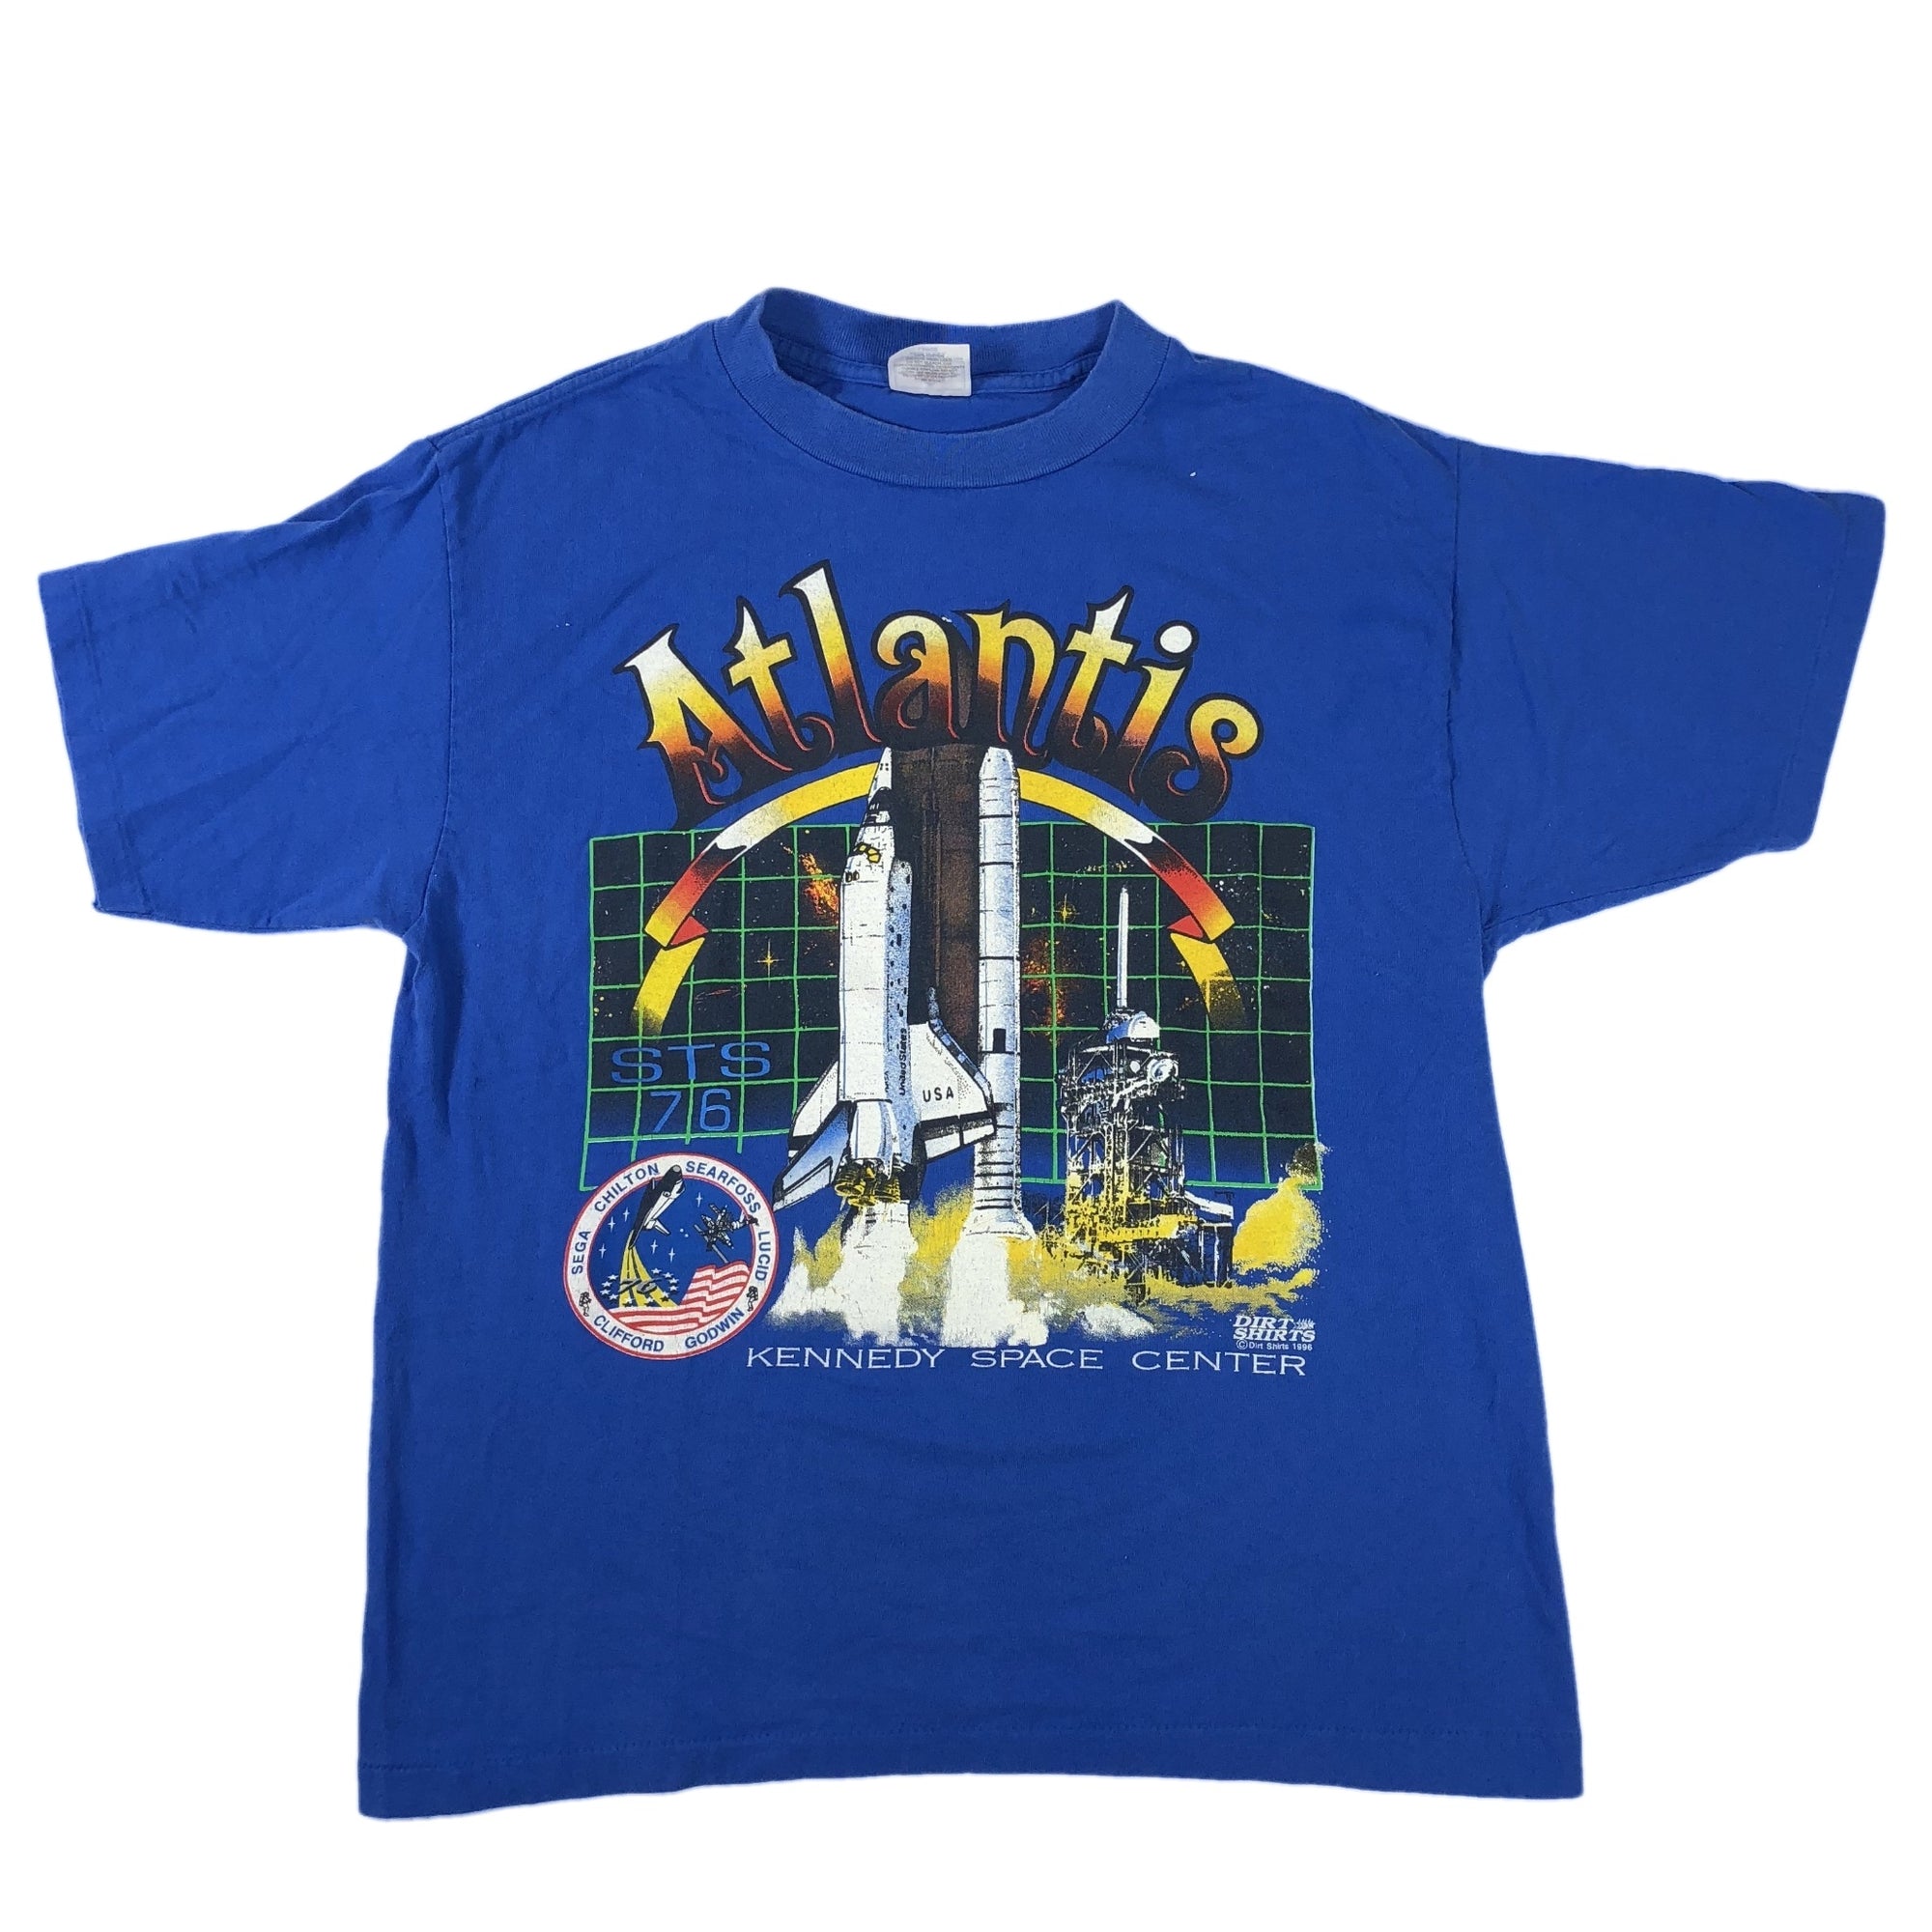 Vintage Kennedy Space Center "Atlantis" T-Shirt - jointcustodydc